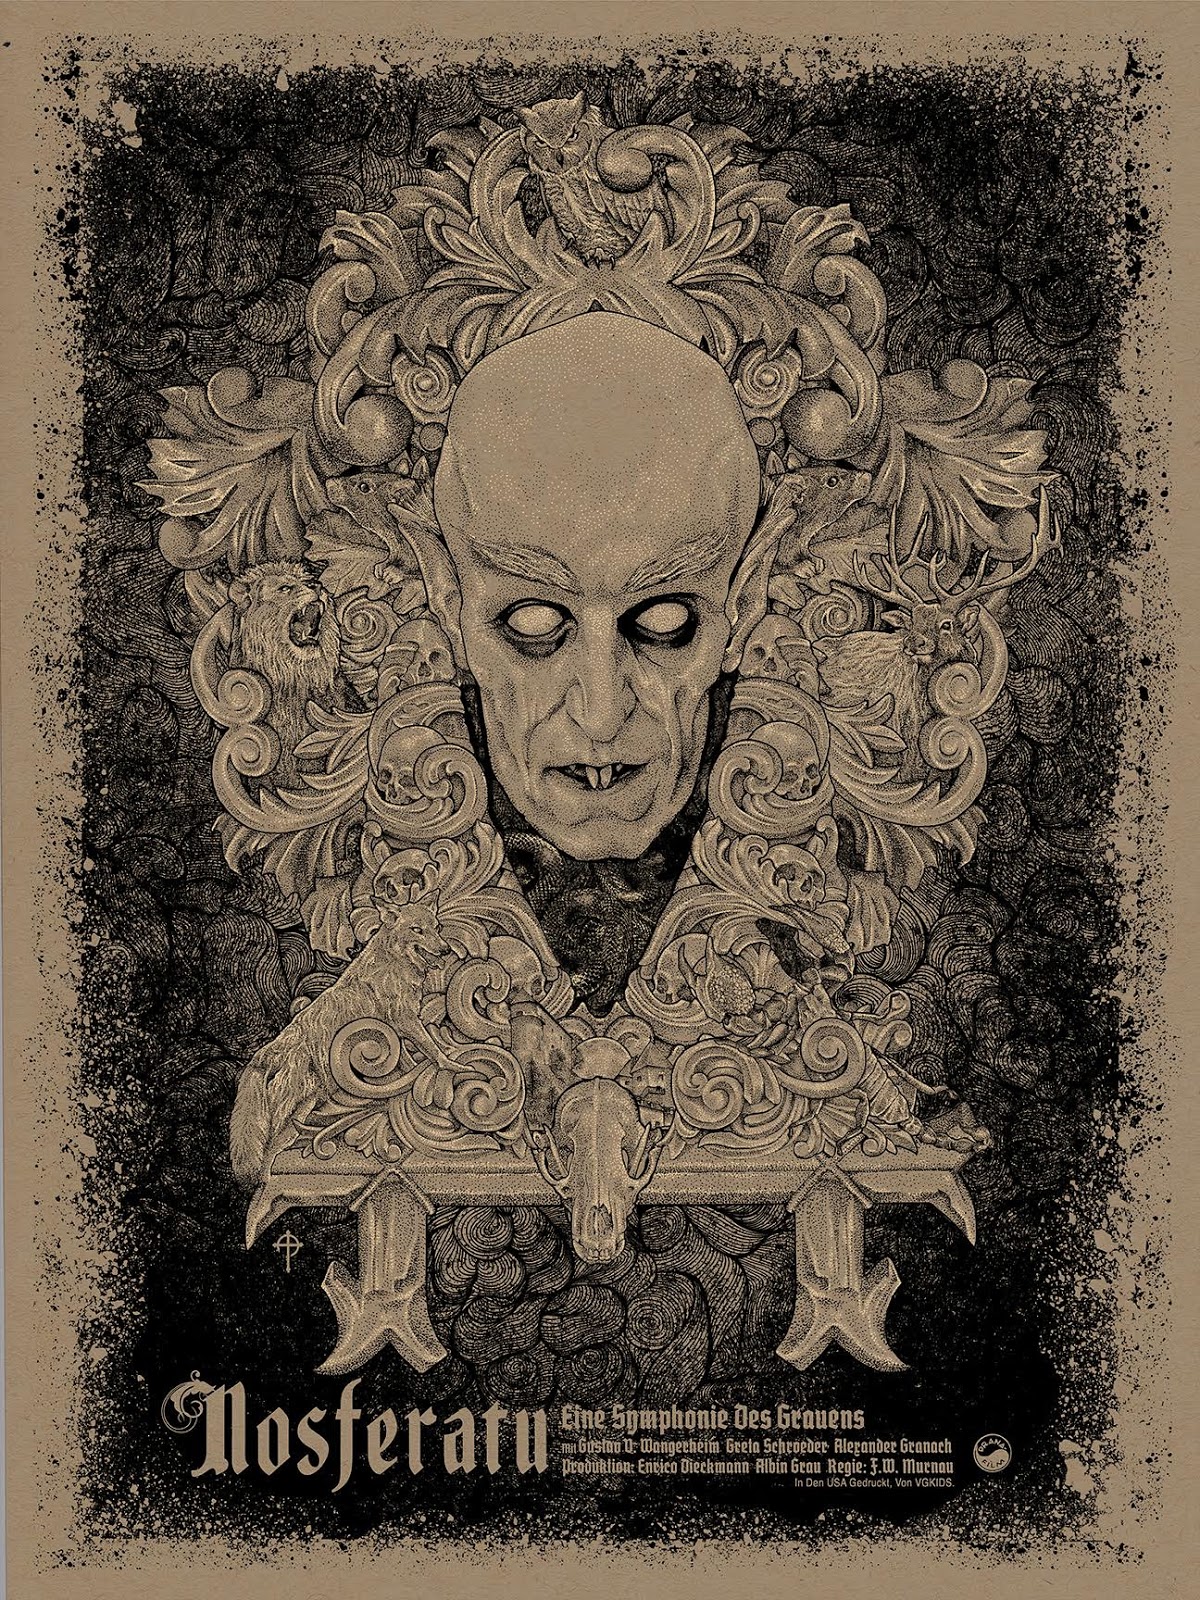 Nosferatu (1922) Dawn Edition poster by Timothy Pittides, 2015